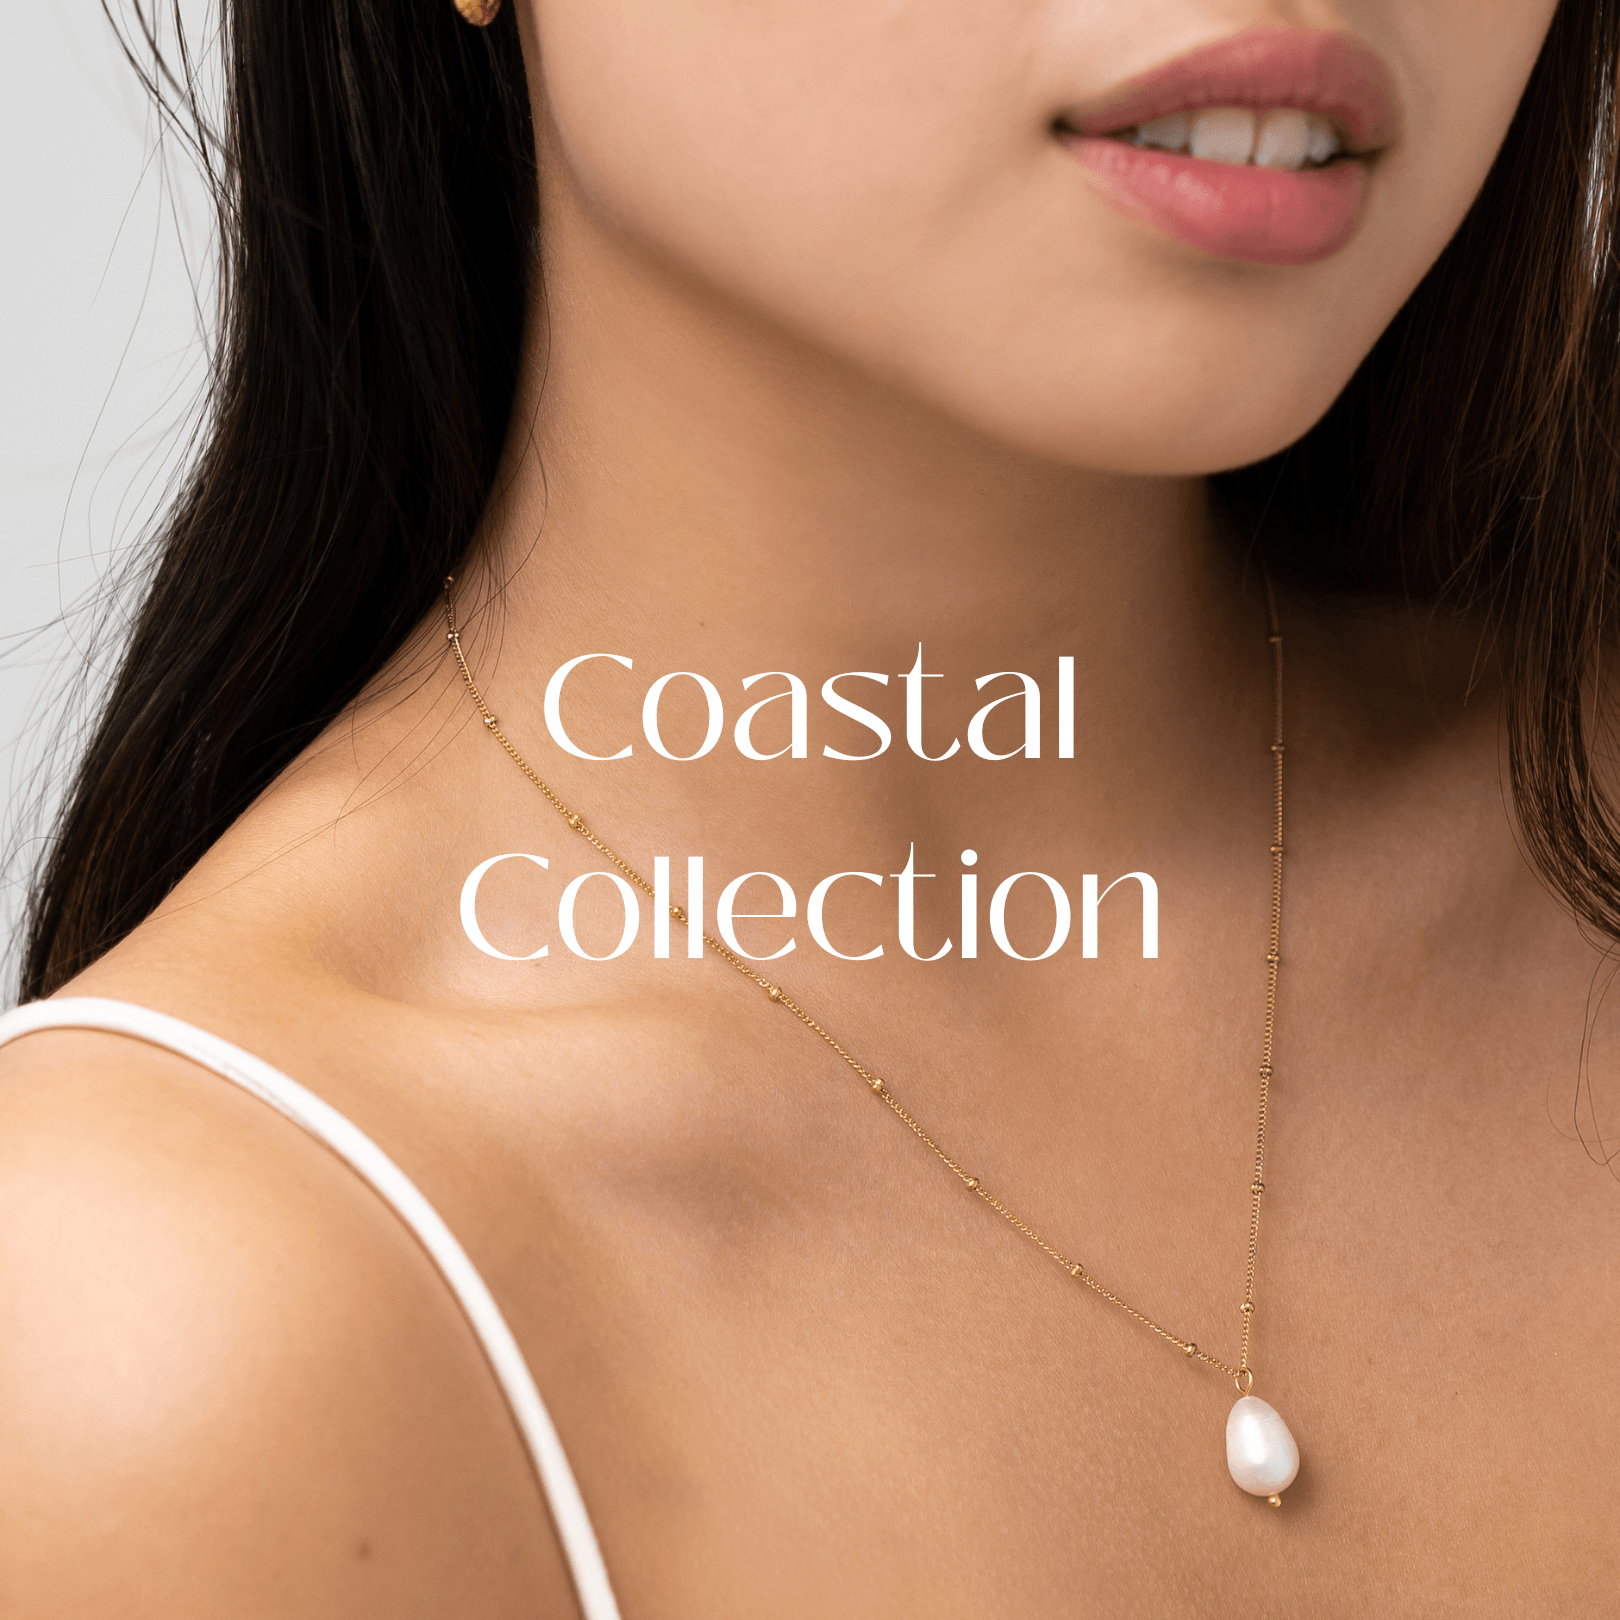 Coastal Collection - La Musa Jewellery